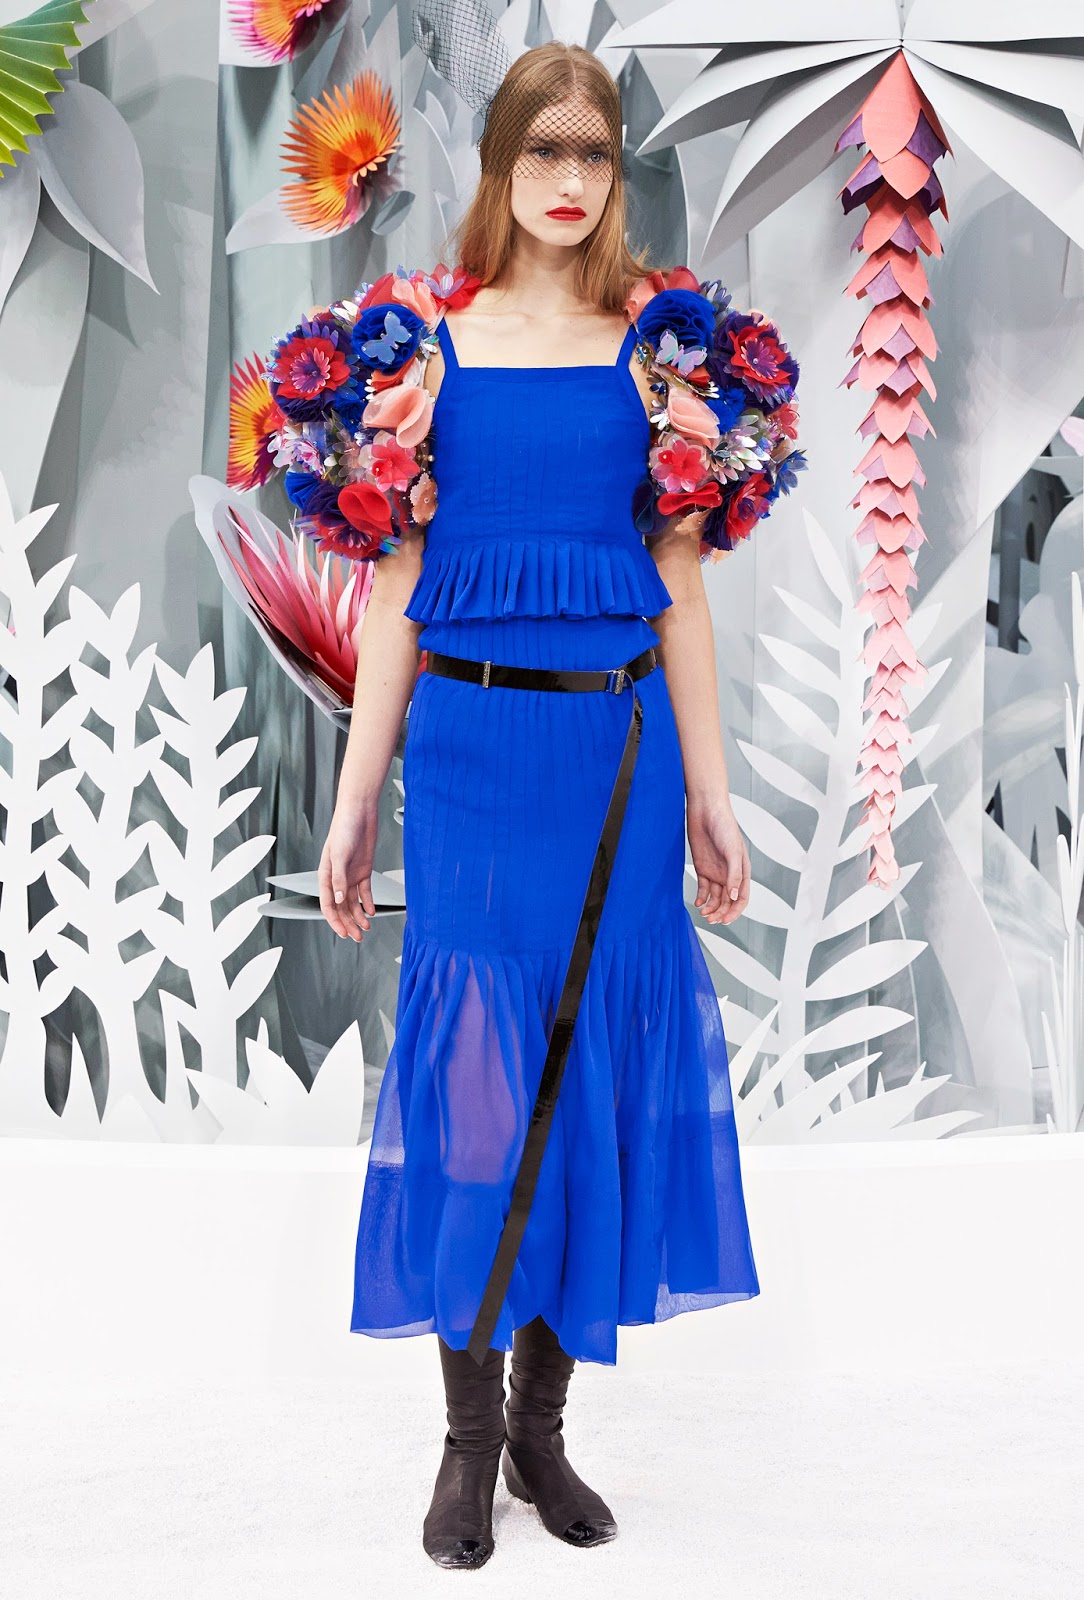 Chanel Spring Summer 2015 - Travel Fashion Tips